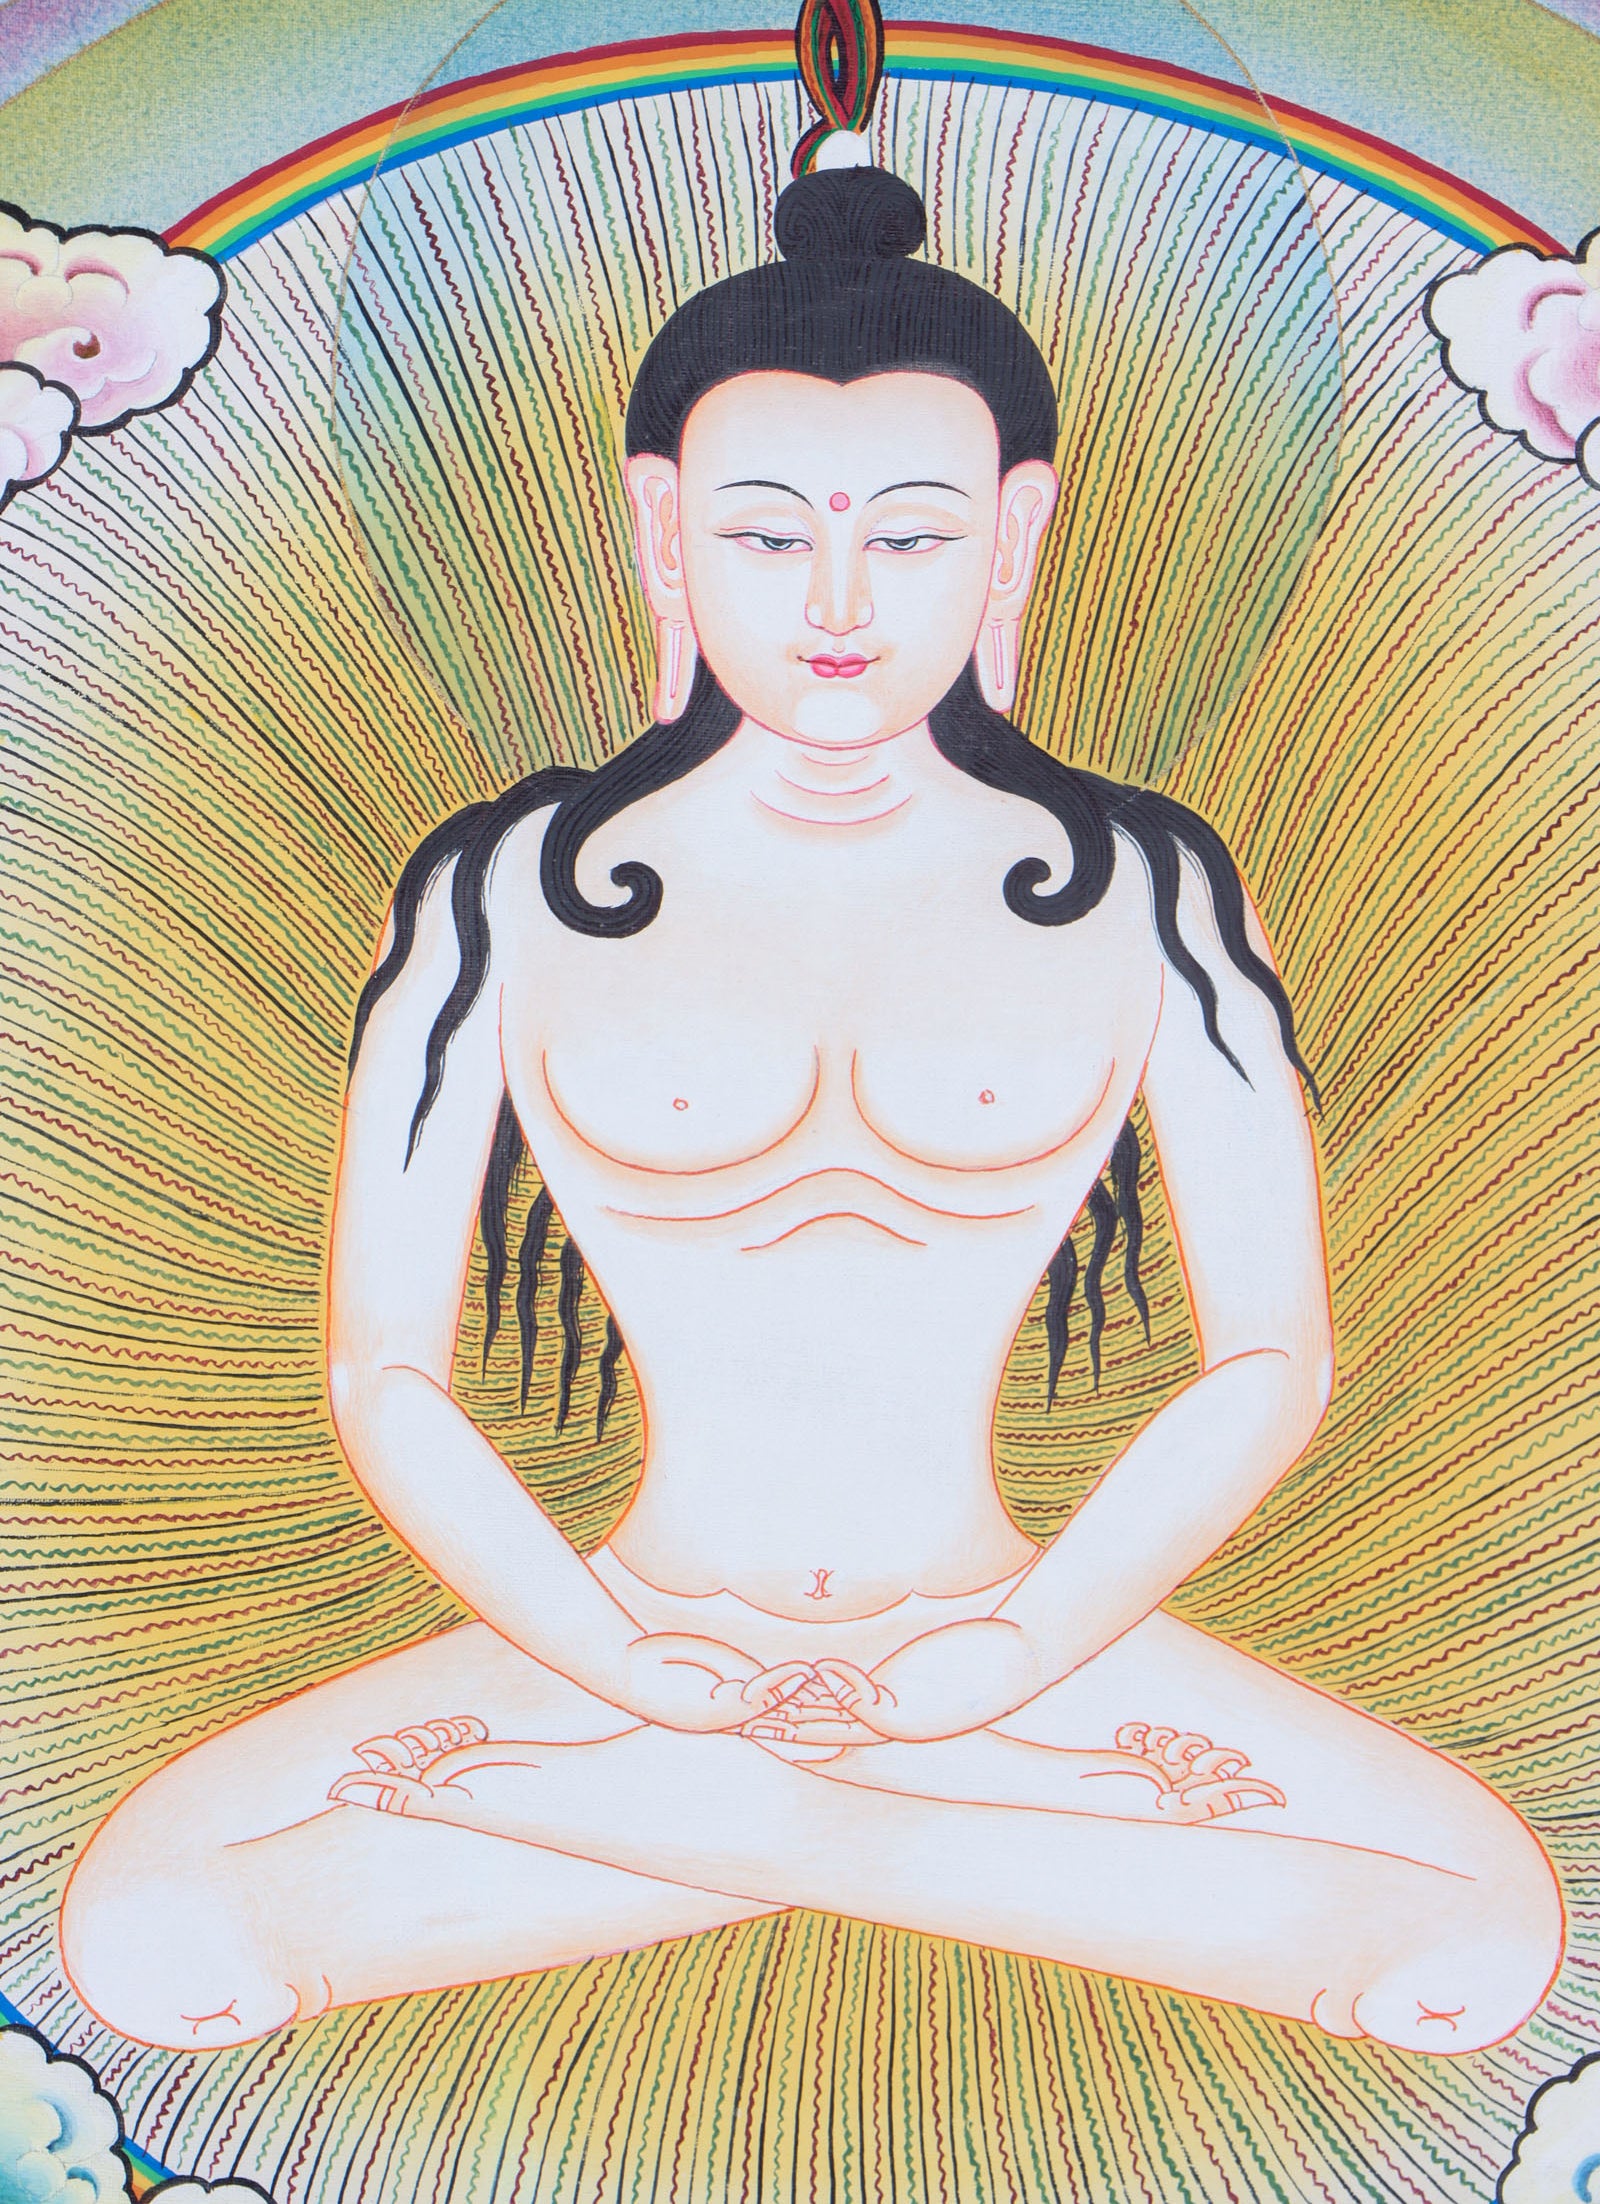 Vairochana Buddha Thangka for purity , wisdom and compassion.